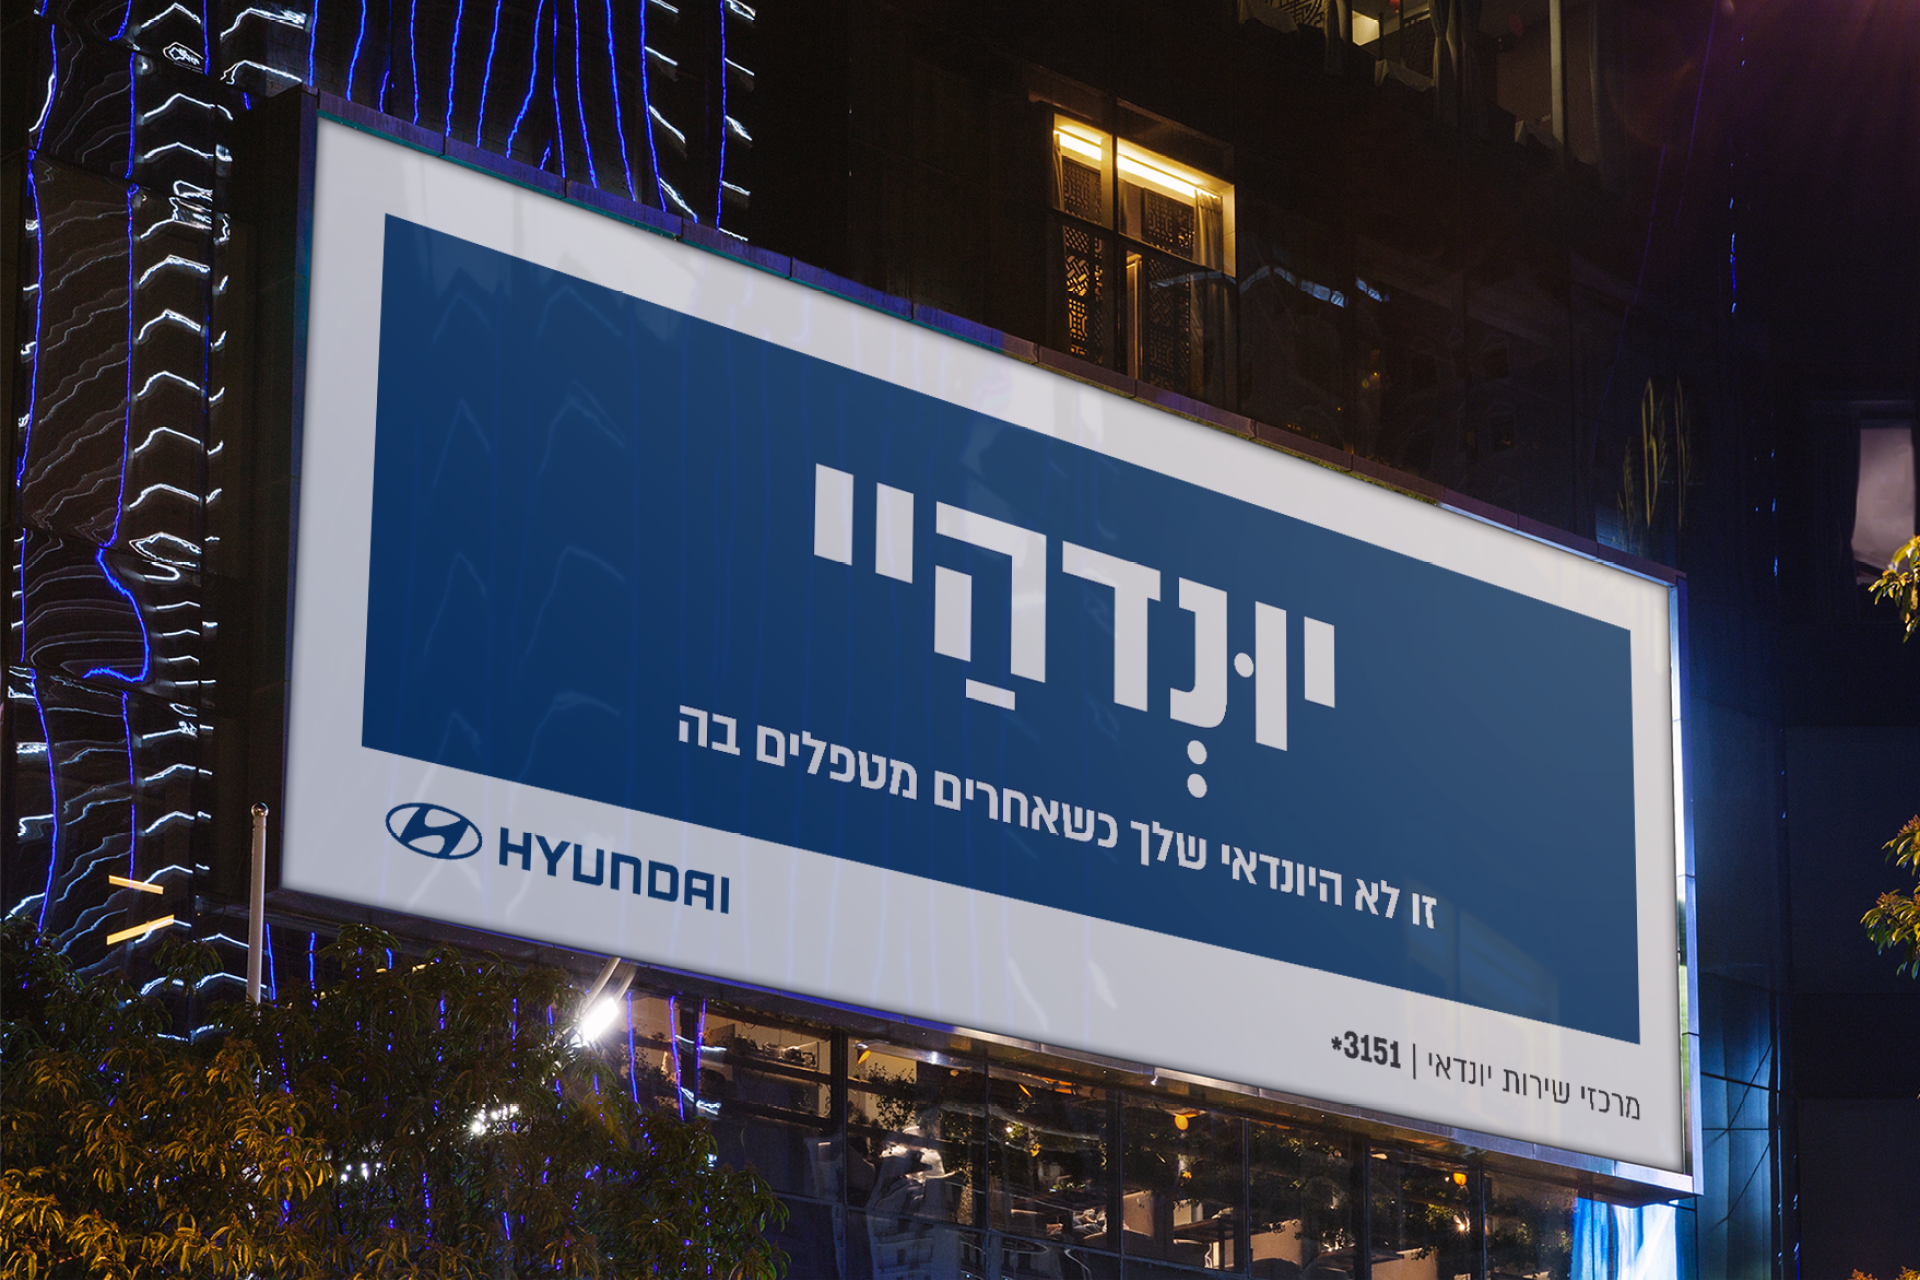 Hyundai campaign sign